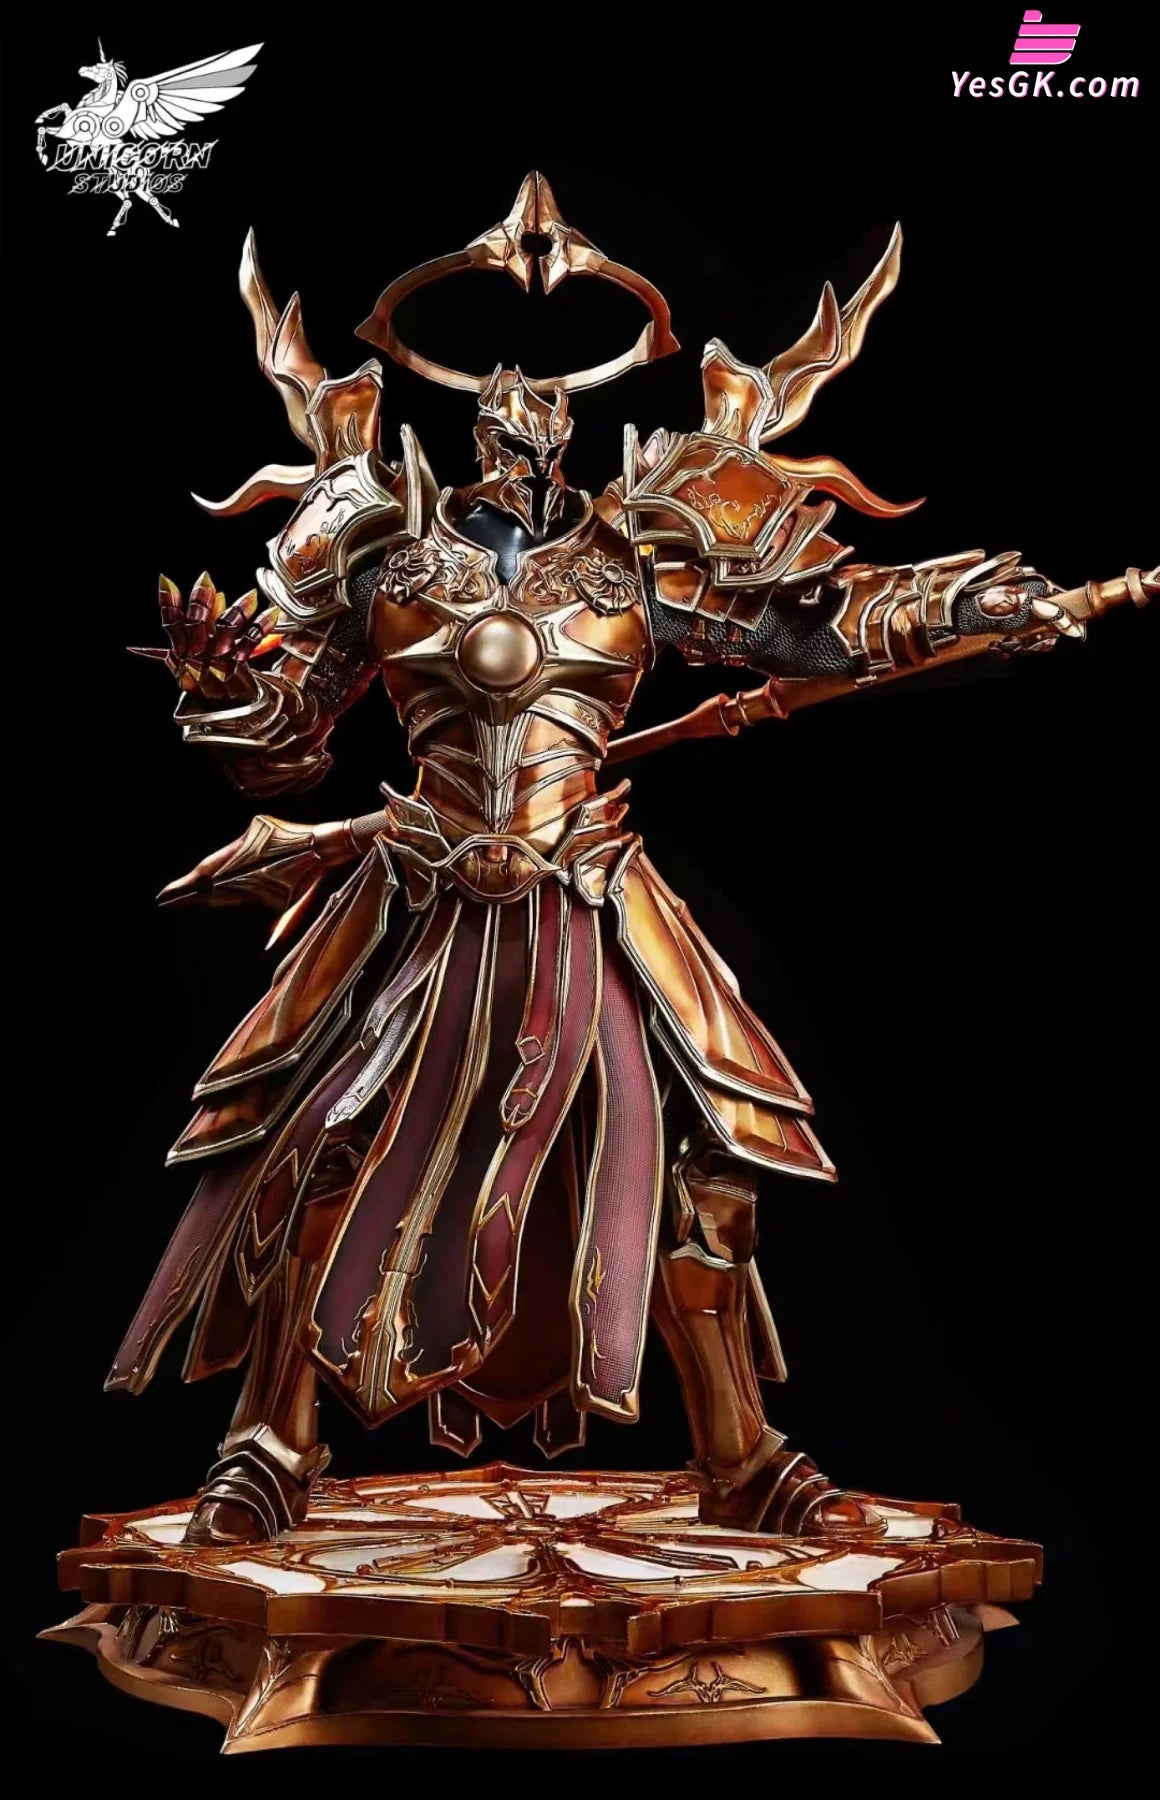 Diablo #1 Imperius Resin Statue - Unicorn Studio [Pre-Order]